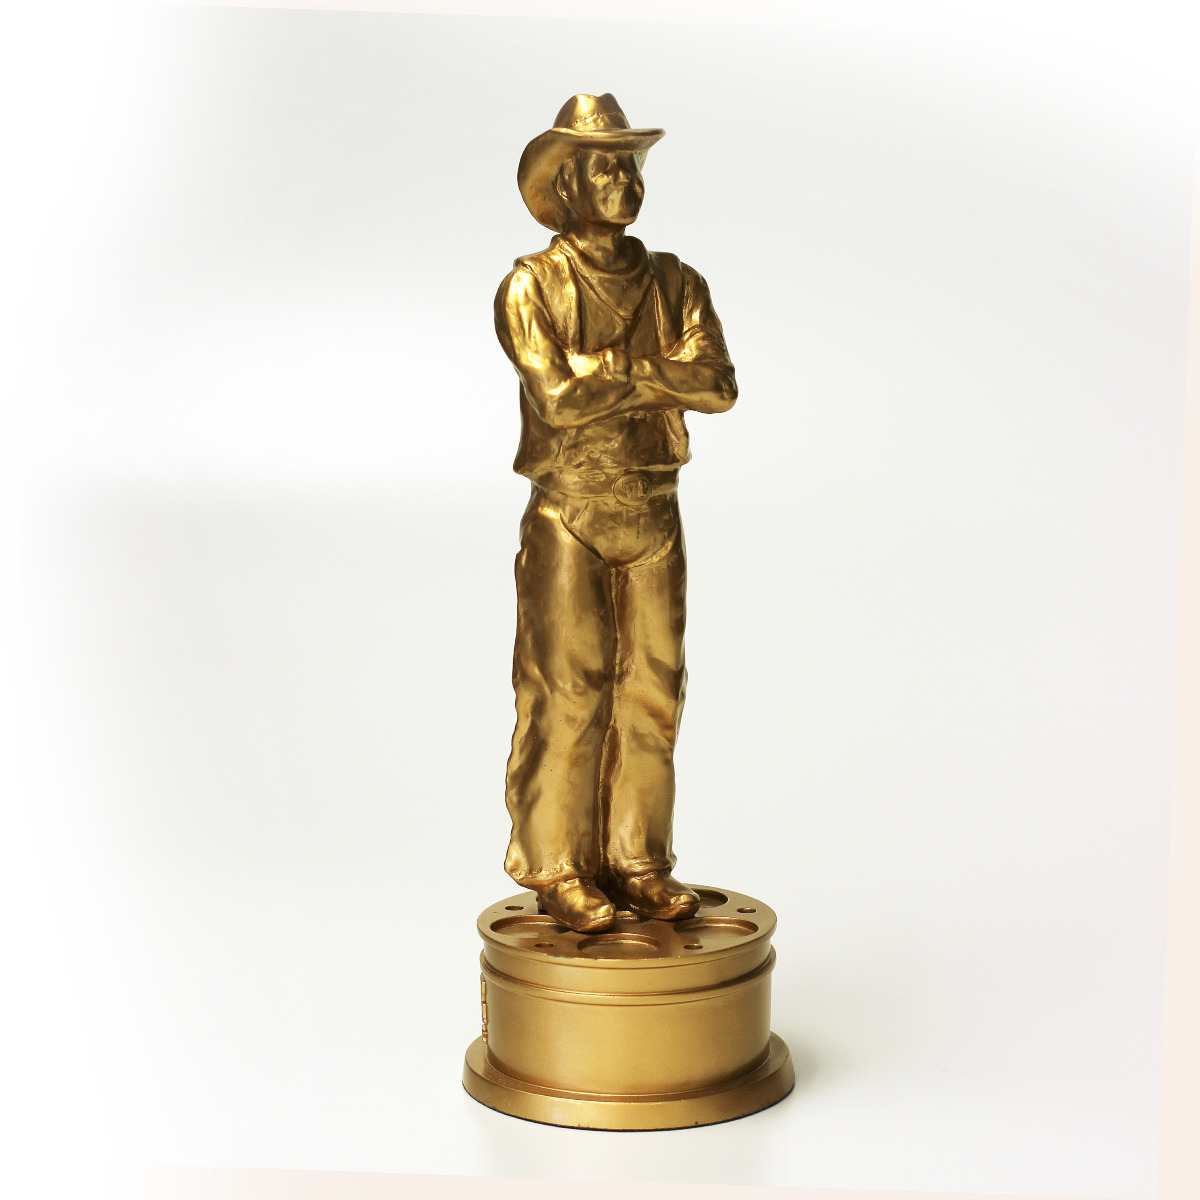 Custom Stone statue figurine bespoke award or trophy